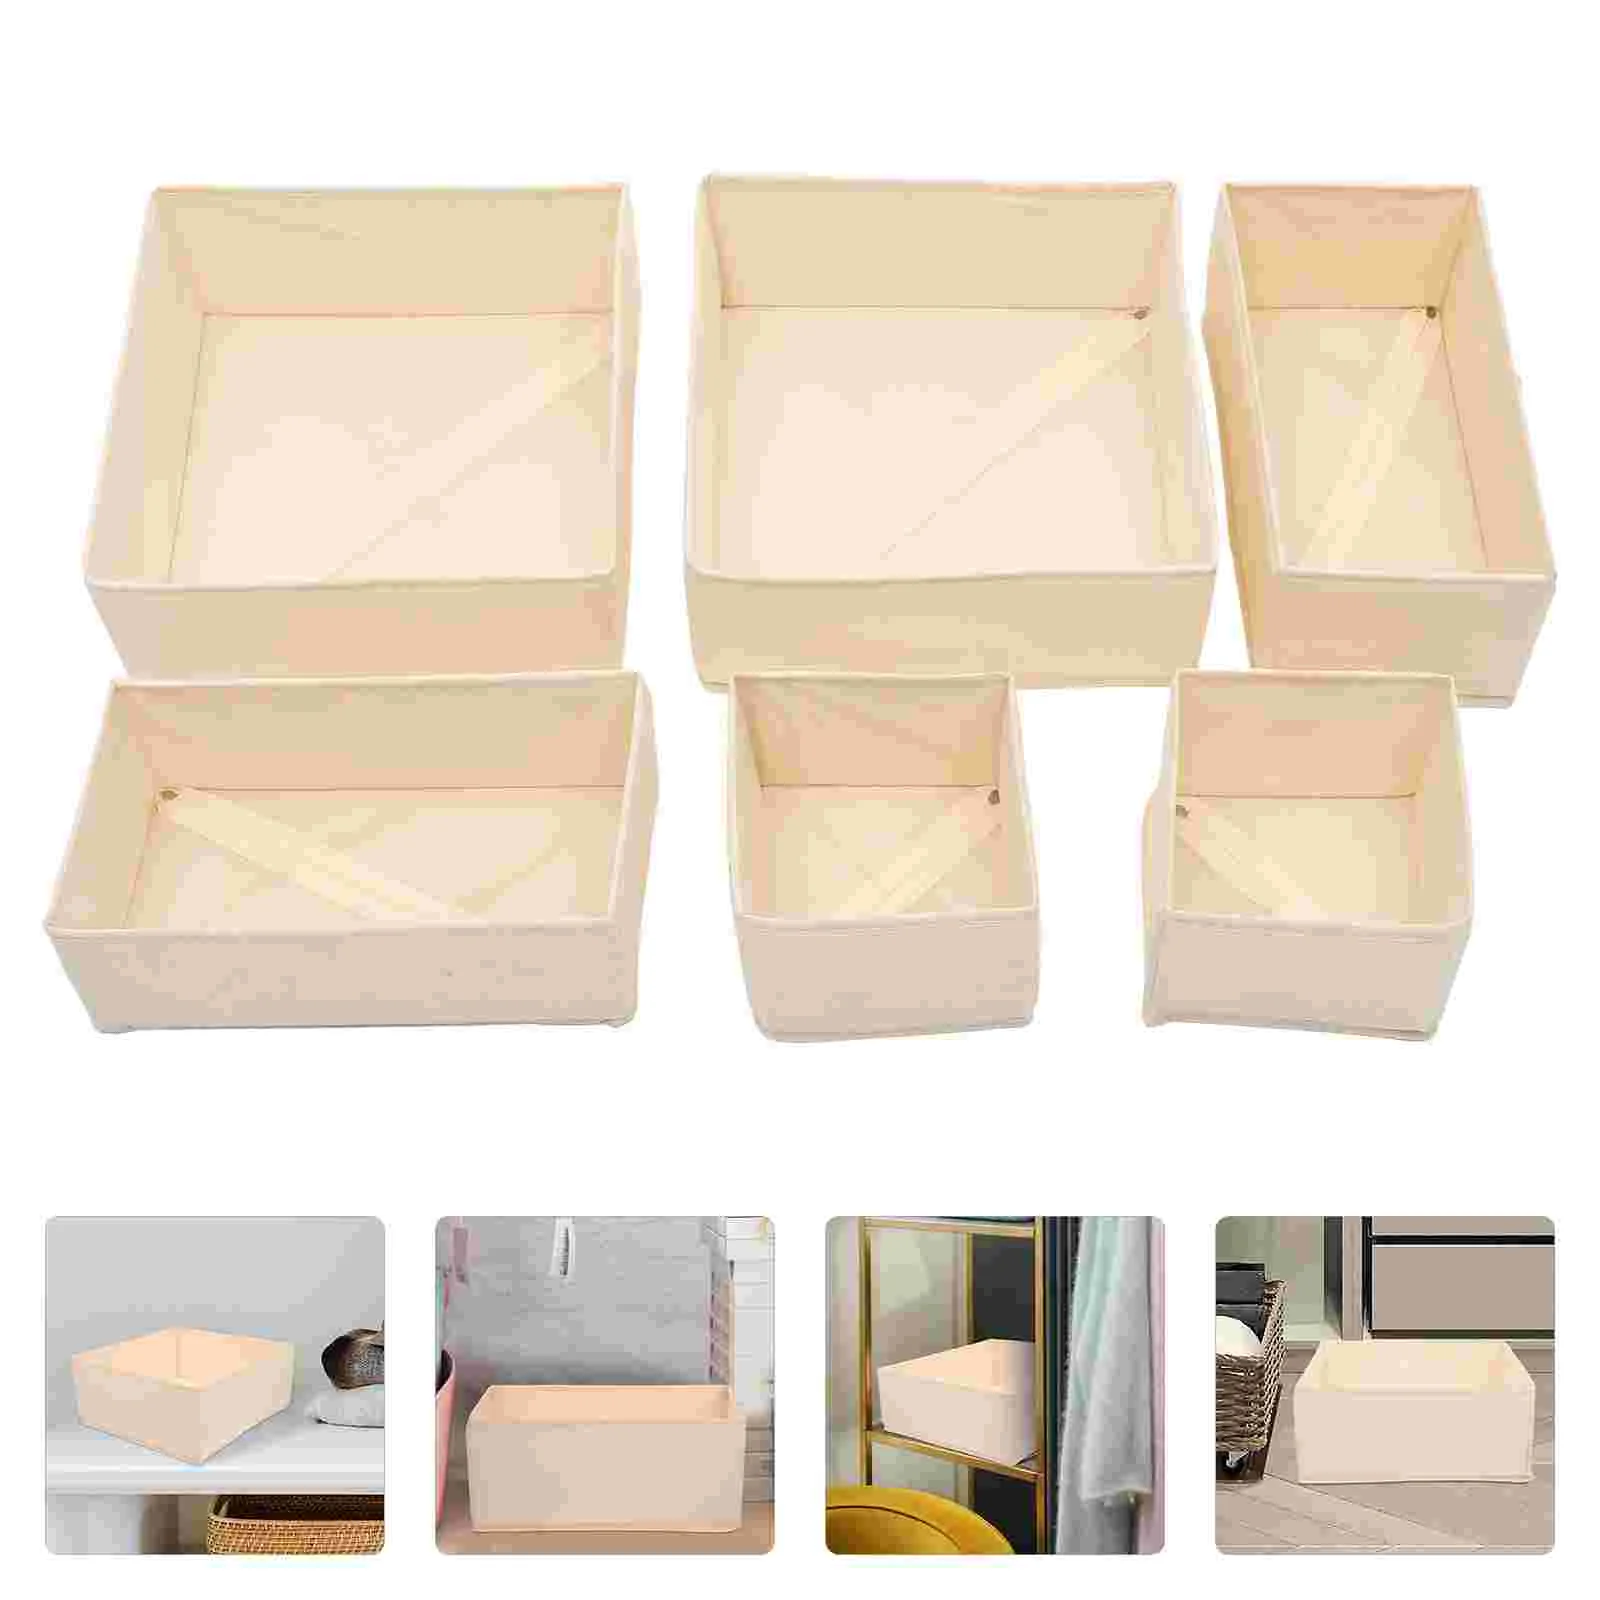 

Foldable Hosiery Bin Case Sock Towel Holder Wardrobe Containers Drawer Organizer